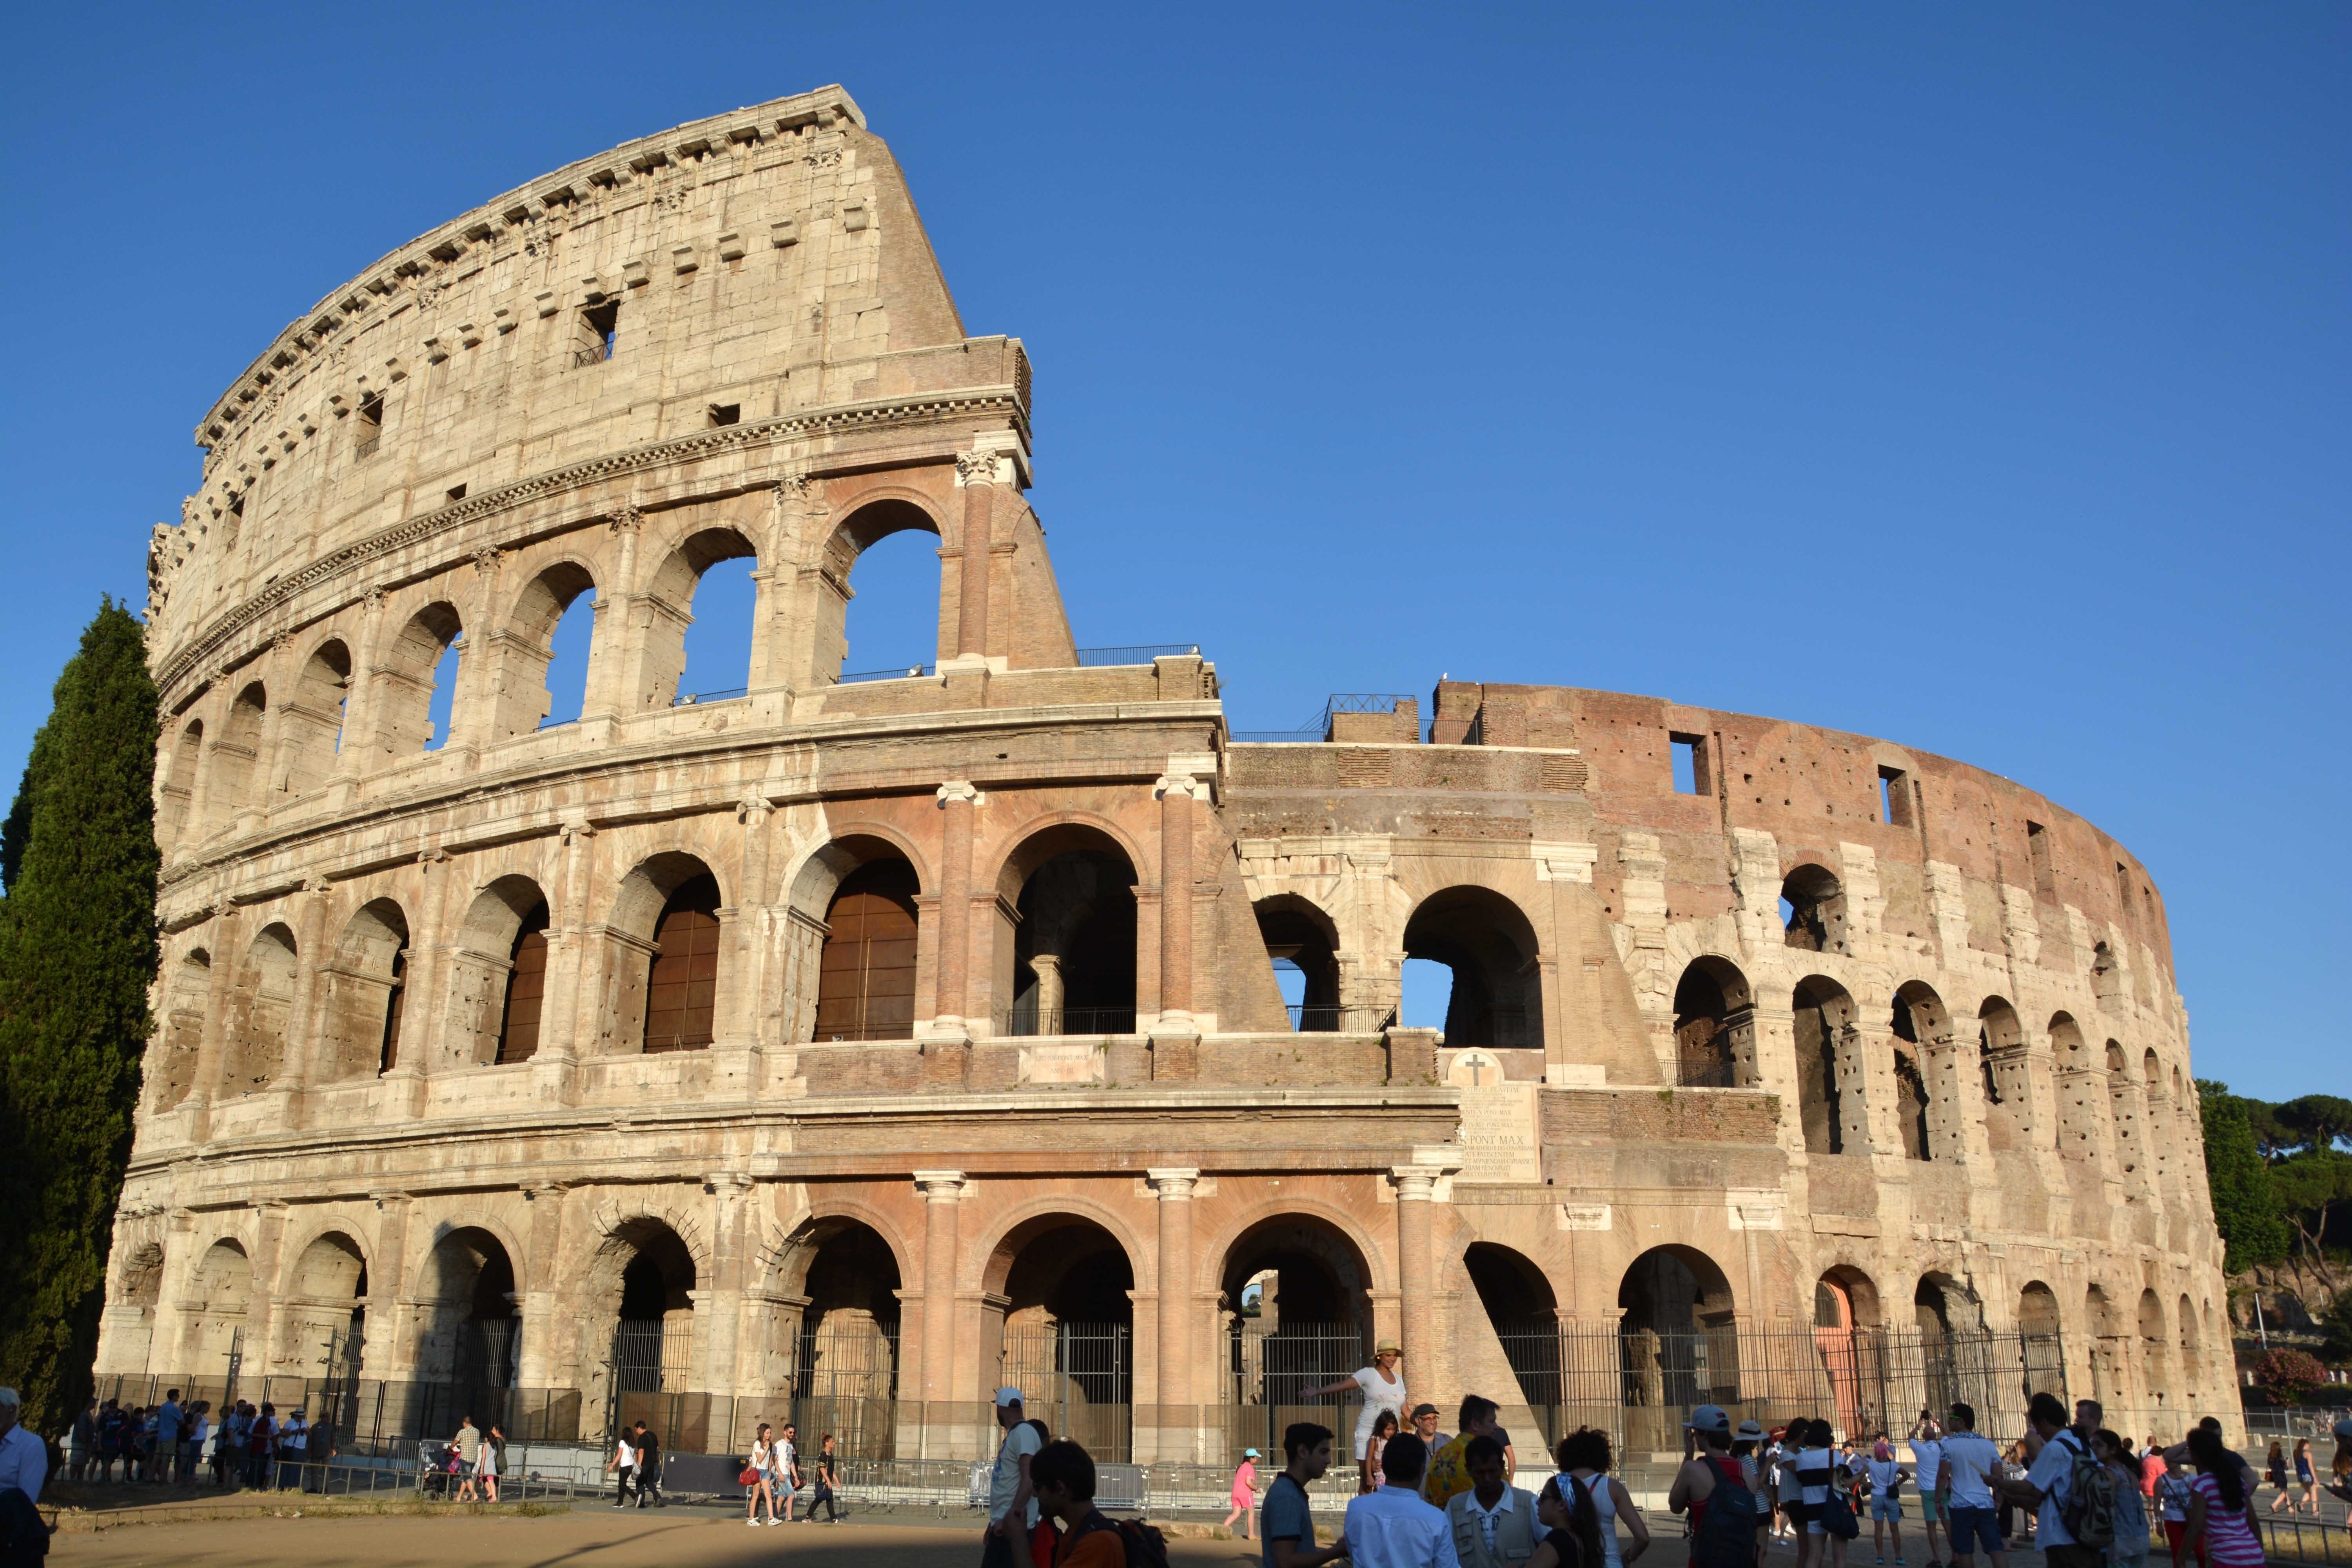 Restored-facade-of-Colosseum-Anadolu-Agency.jpg